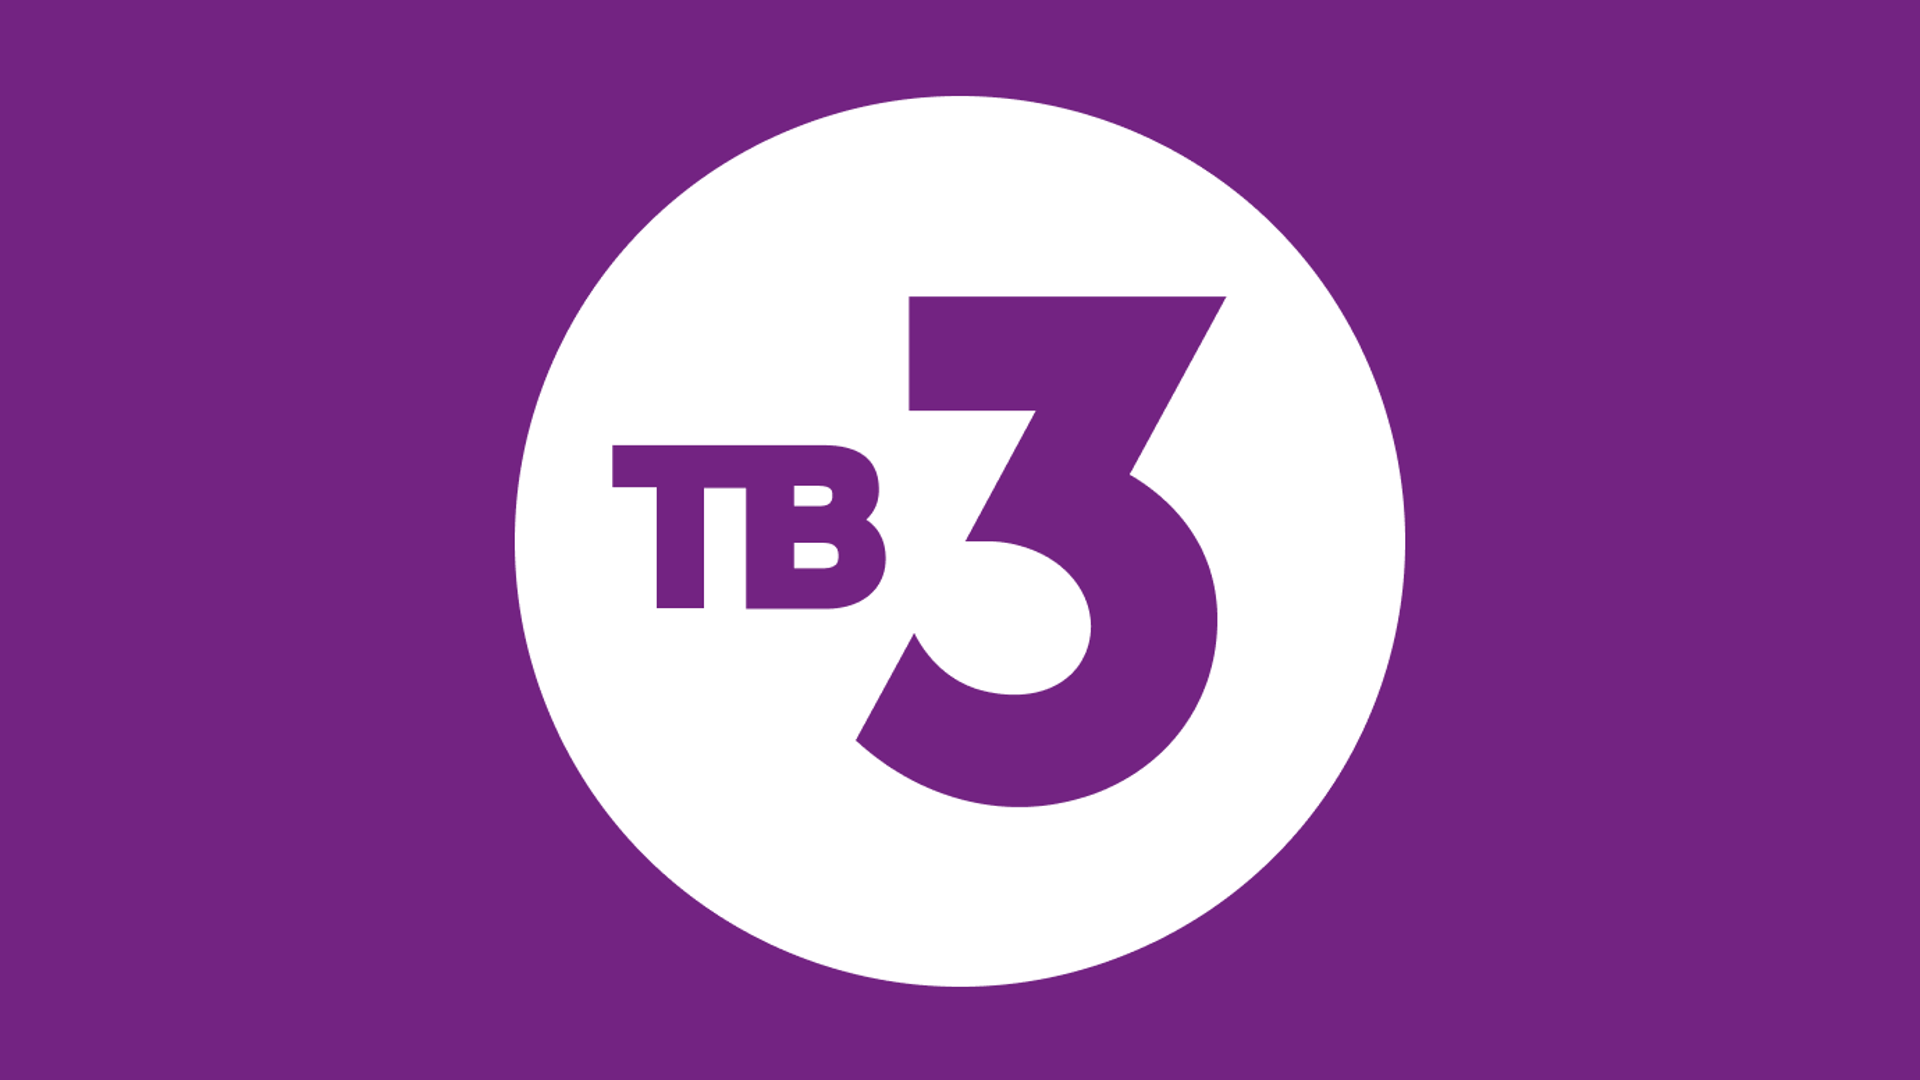 3 июня 2015. Тв3 Телеканал логотип. Канал тв3. ТВ 3 эмблема. Эмблема канала тв3.